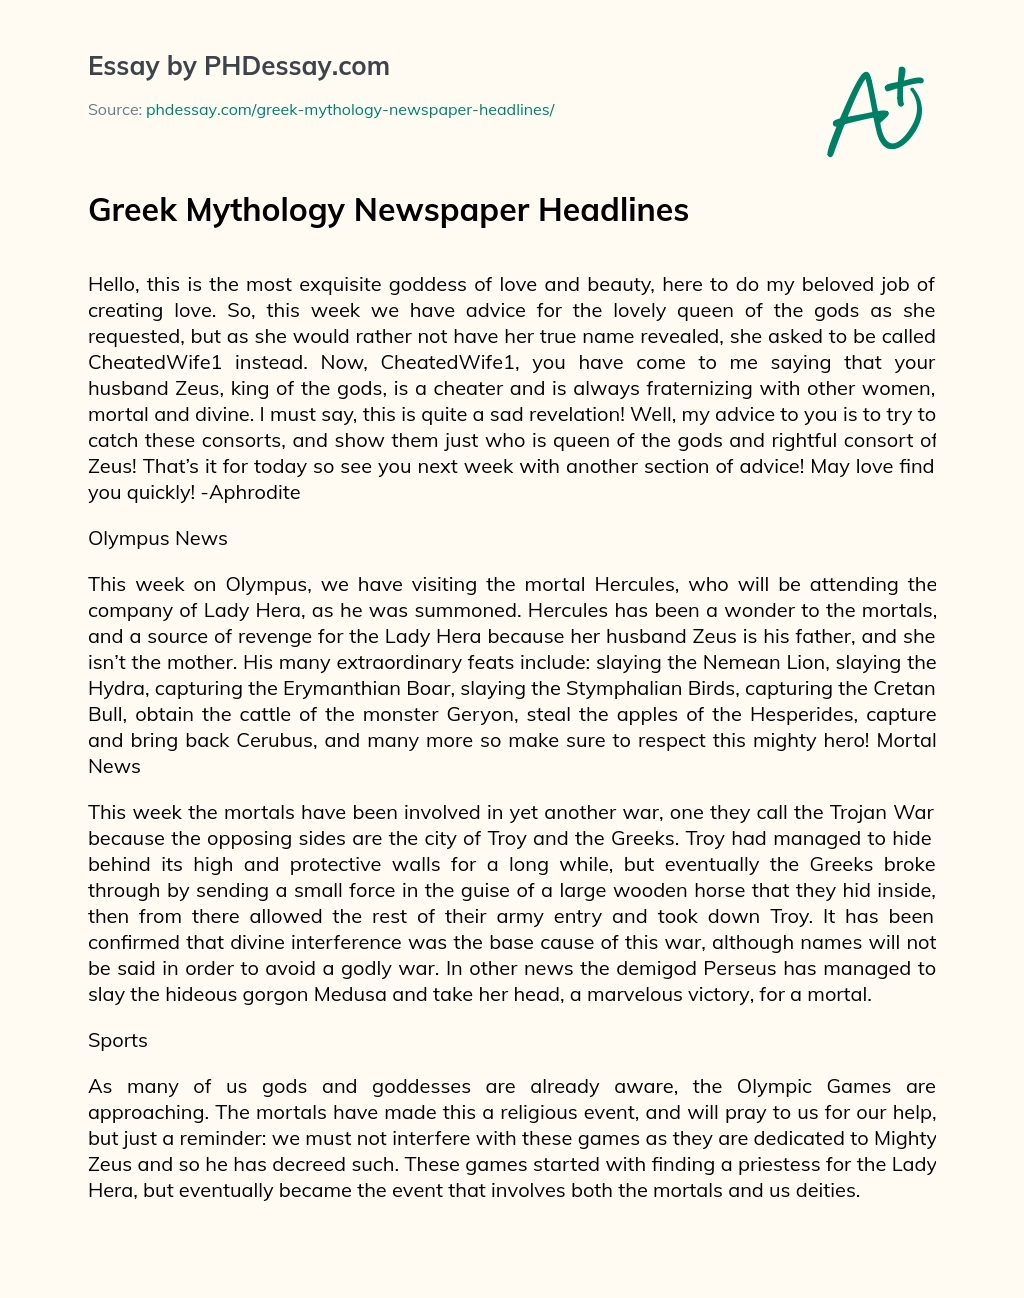 Greek Mythology Newspaper Headlines essay